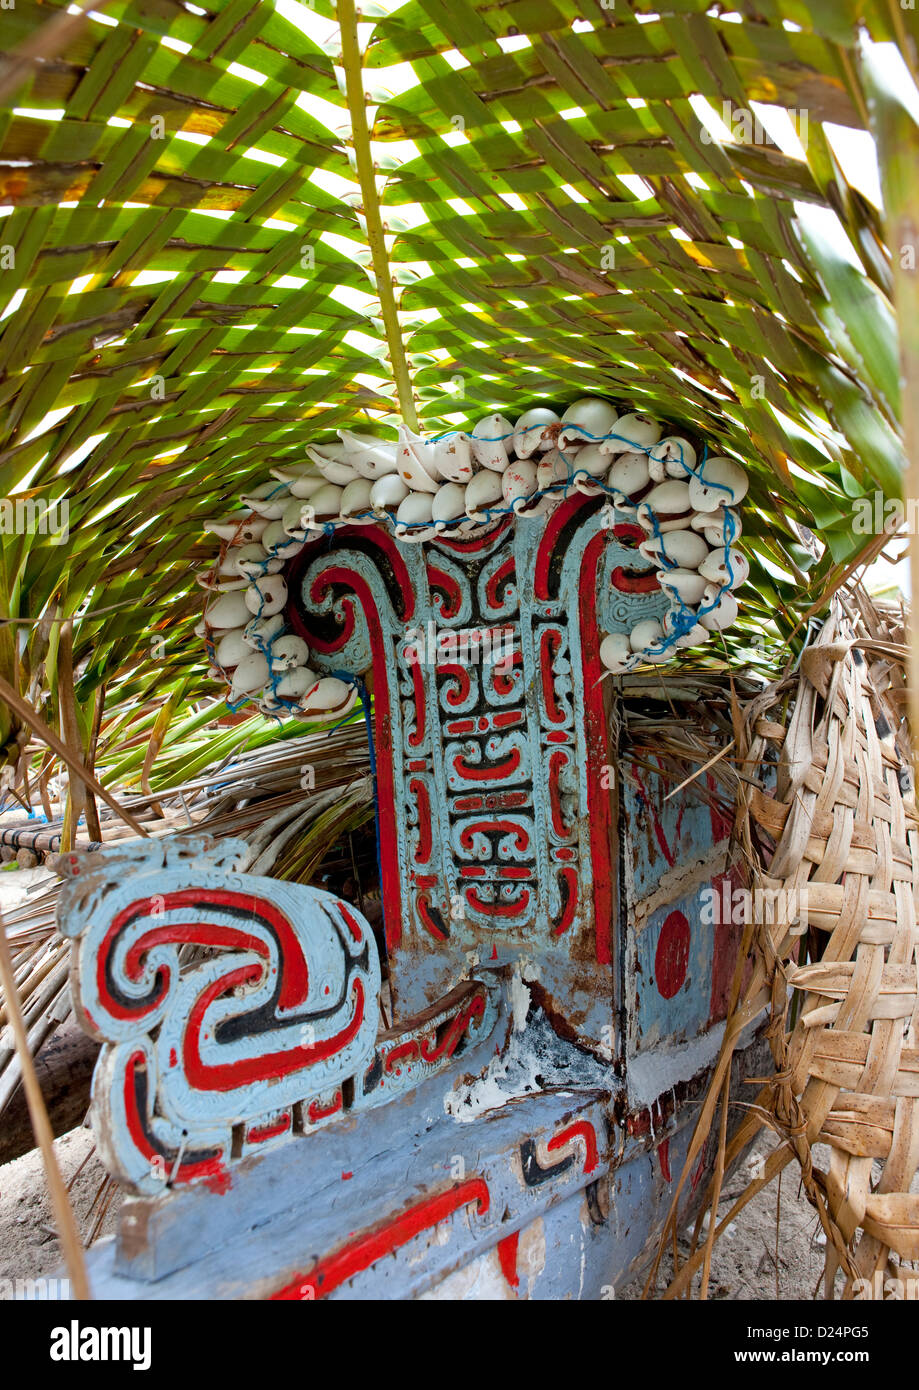 Kula Canoa decorada con conchas, Islas Trobriand, Papua Nueva Guinea  Fotografía de stock - Alamy